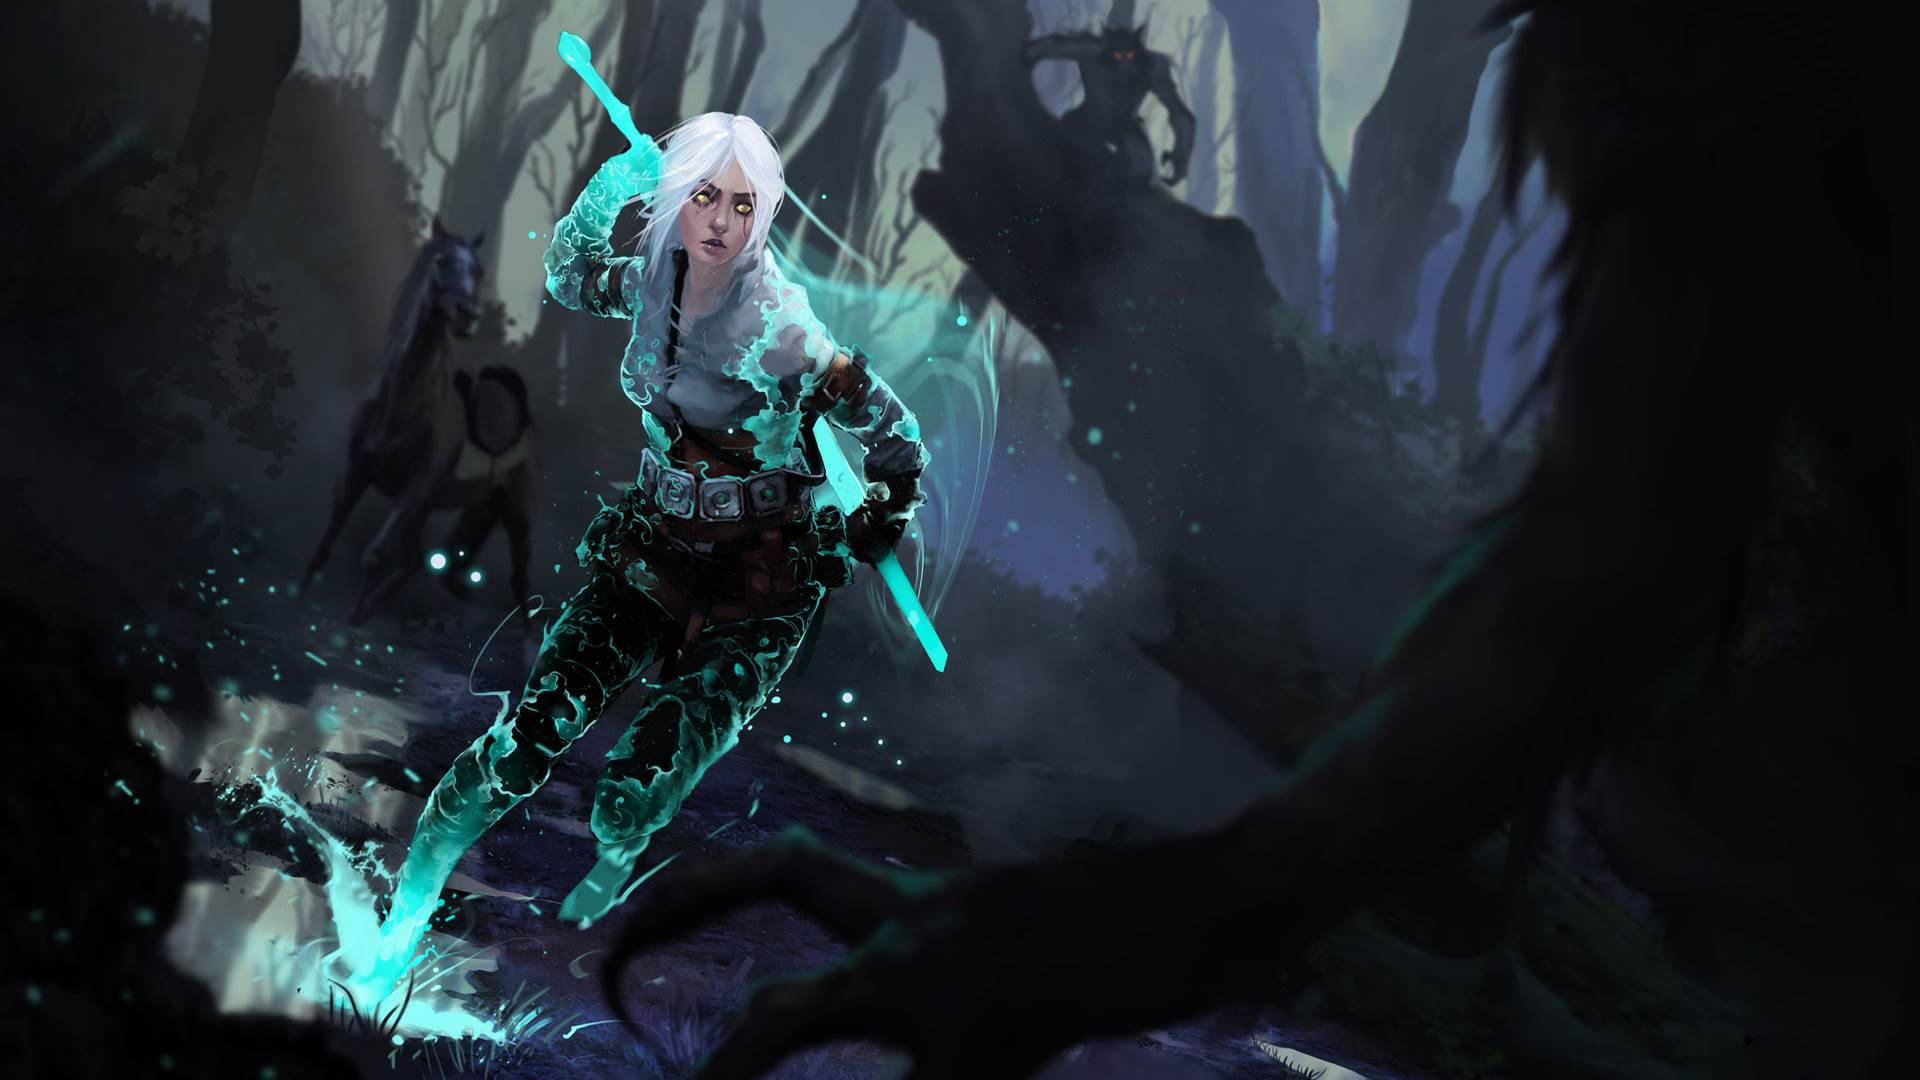 The Witcher - Ciri traverses a dark forest Wallpaper